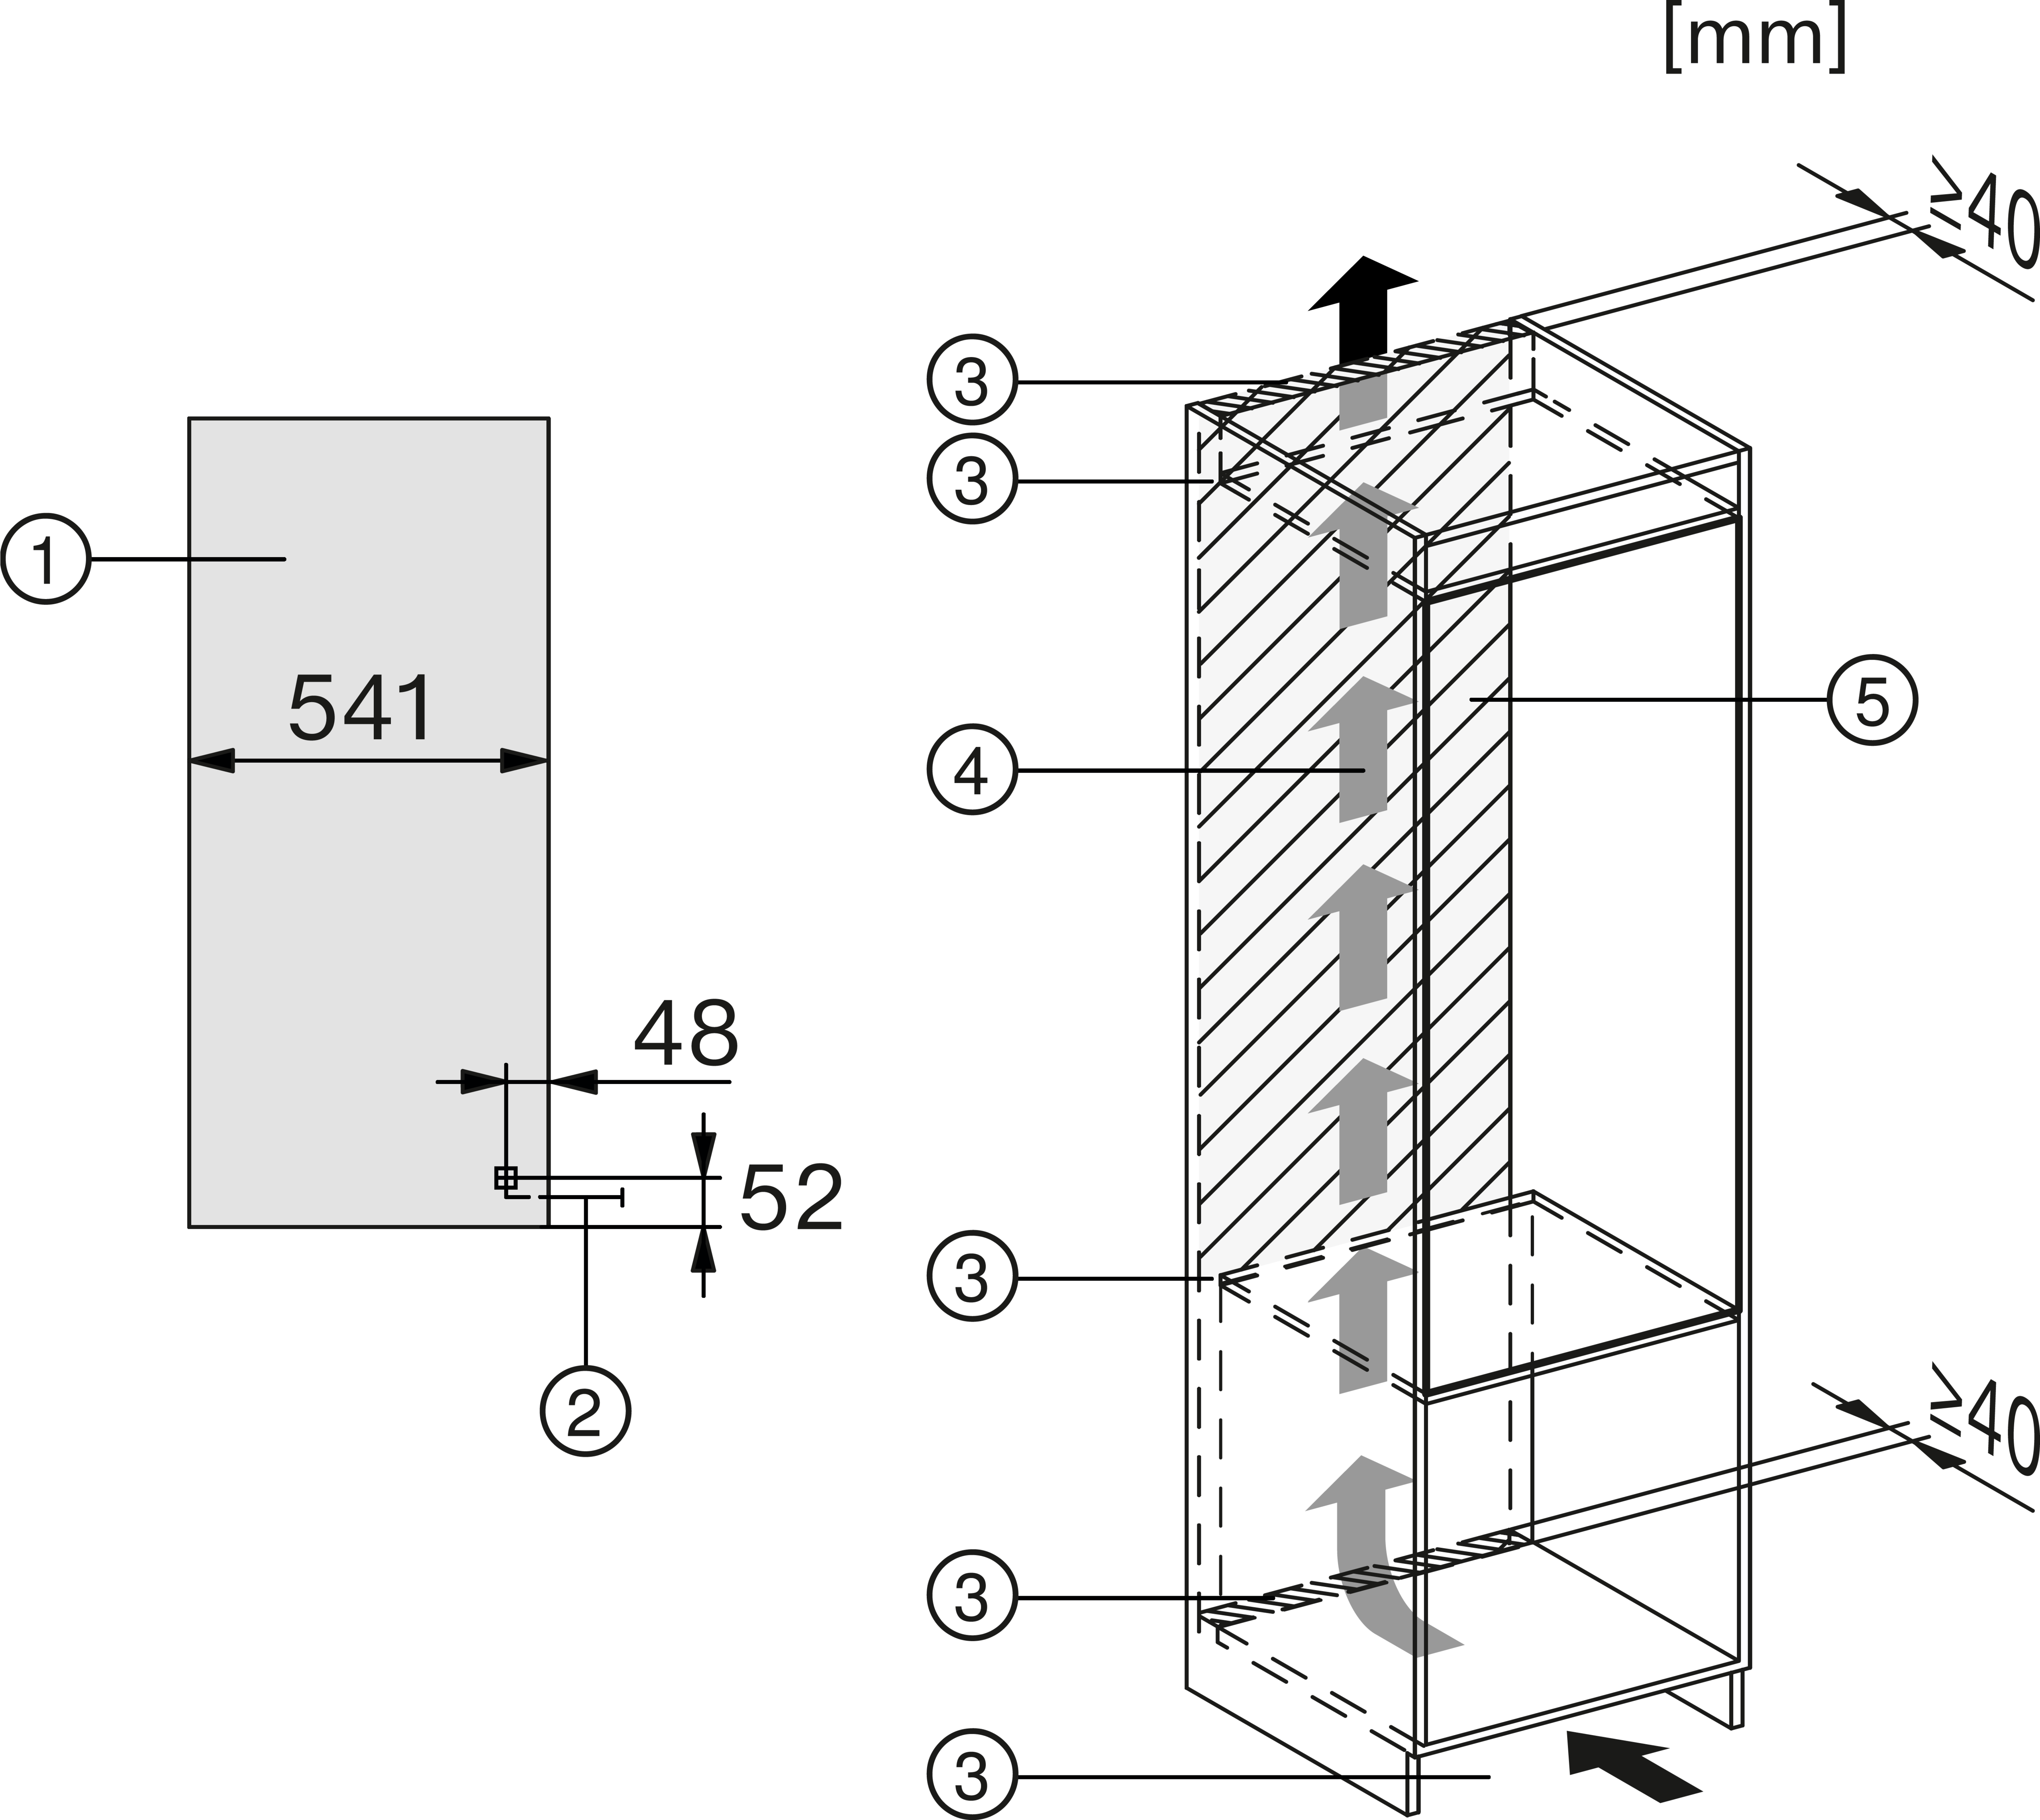 Maattekening MIELE koelkast inbouw K7316E